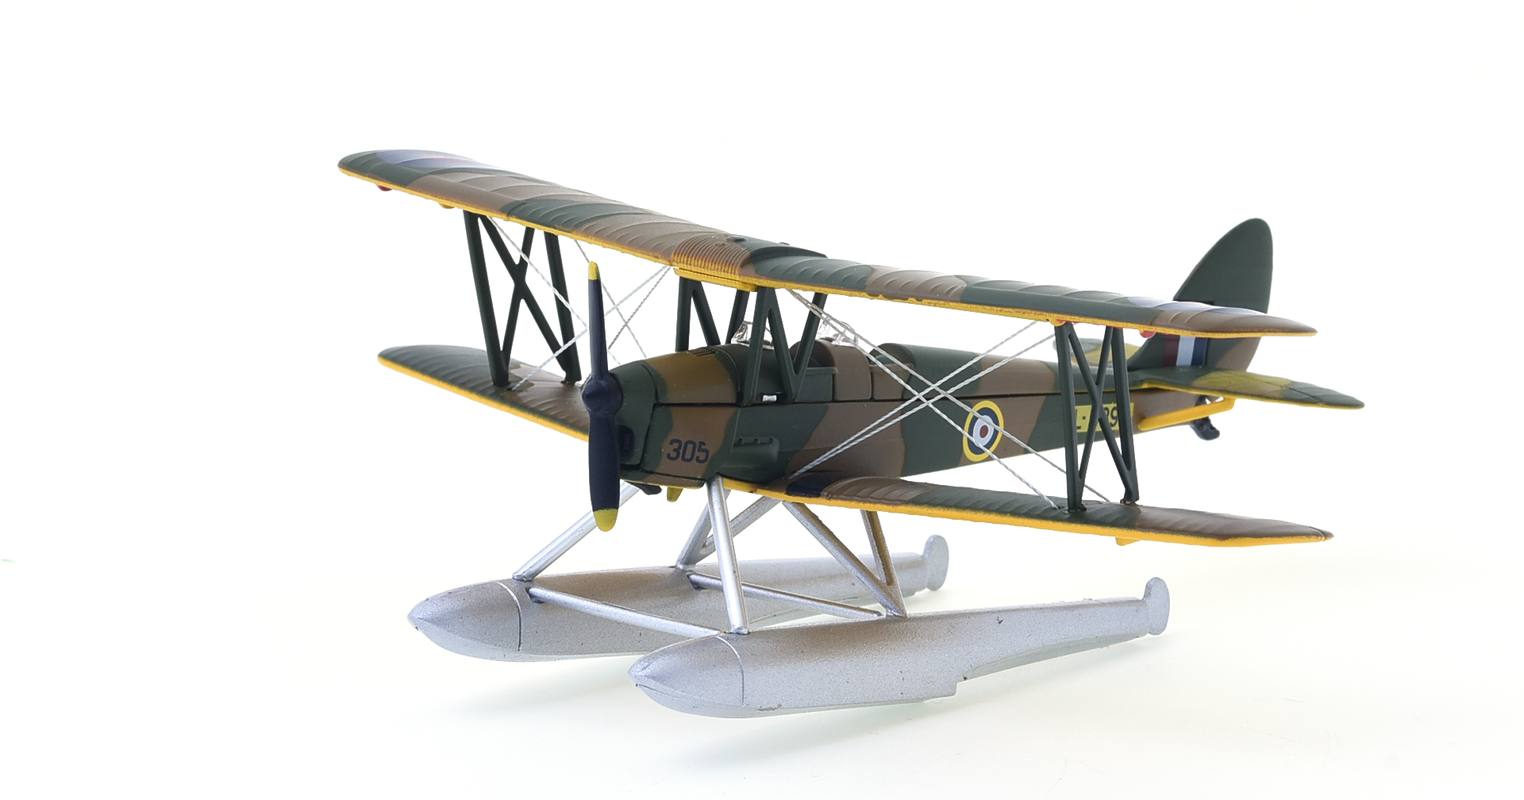 Oxford Diecast 1:72 Tiger Moth Floatplane RNFAA T7187 